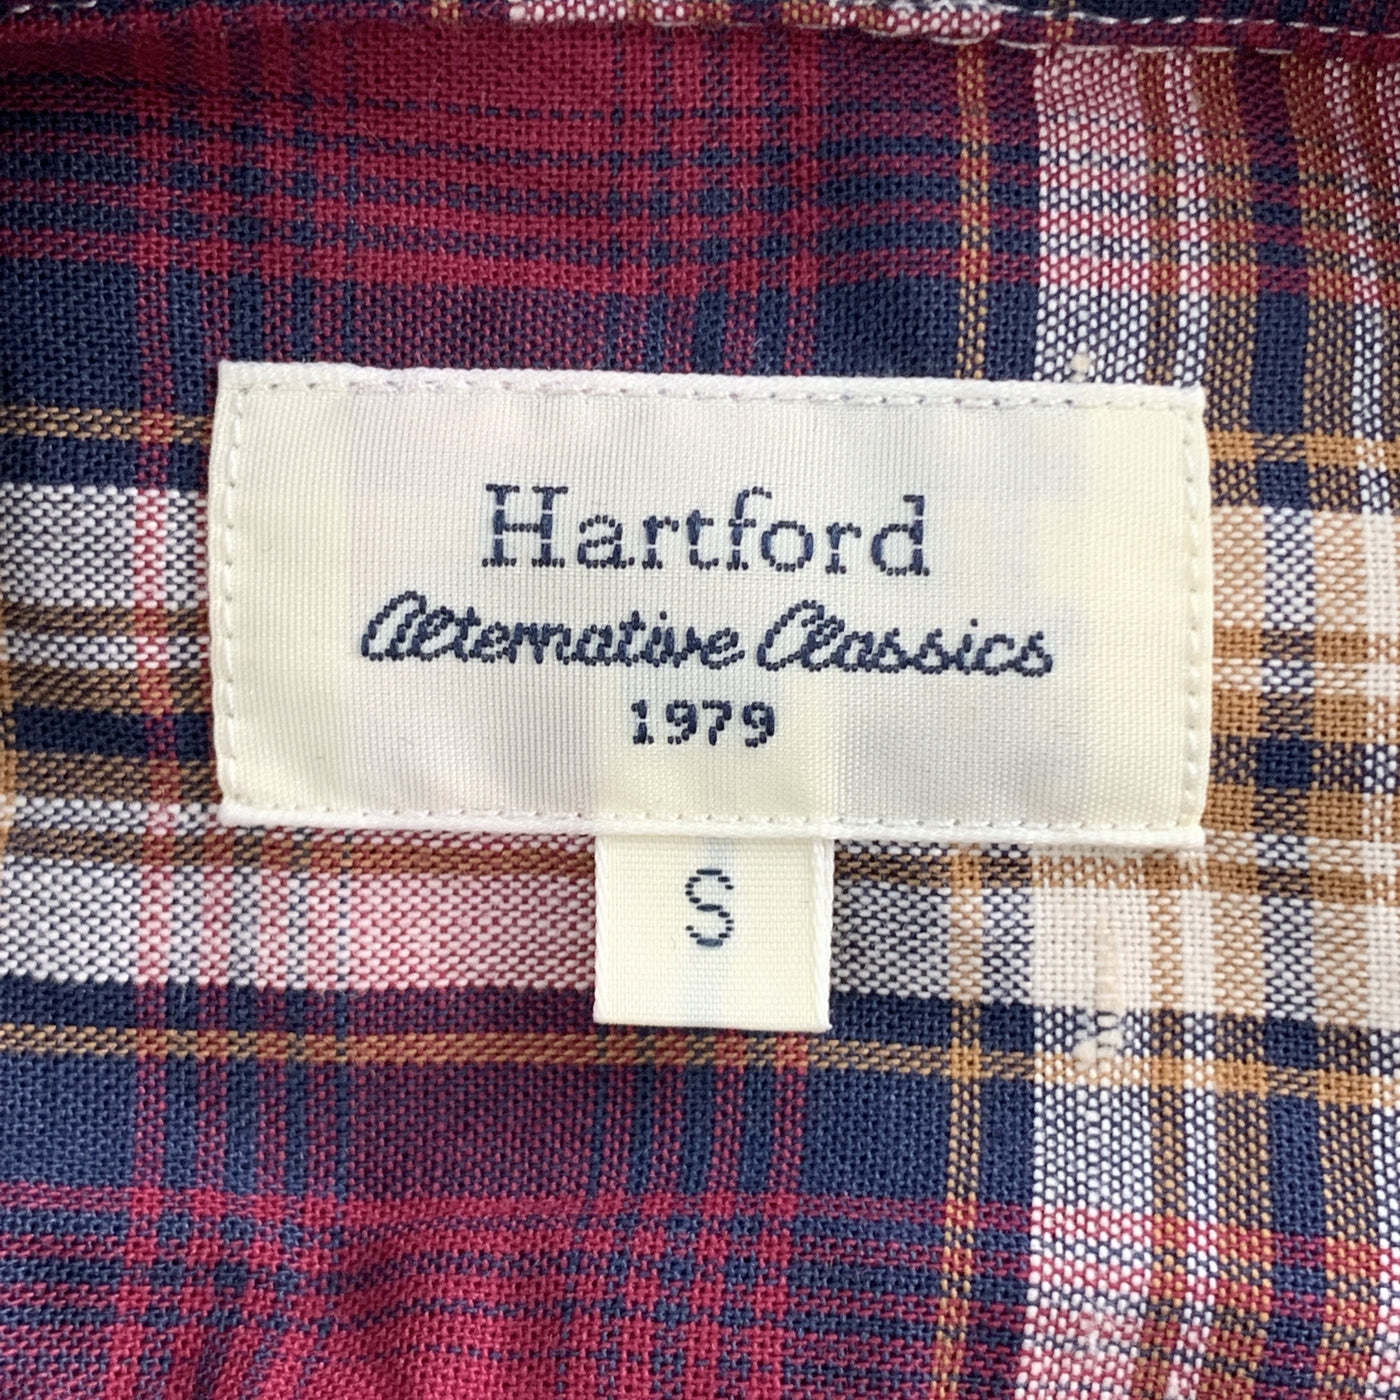 HARTFORD Size S Burgundy & Brown Plaid Cotton Button Up Long Sleeve Shirt